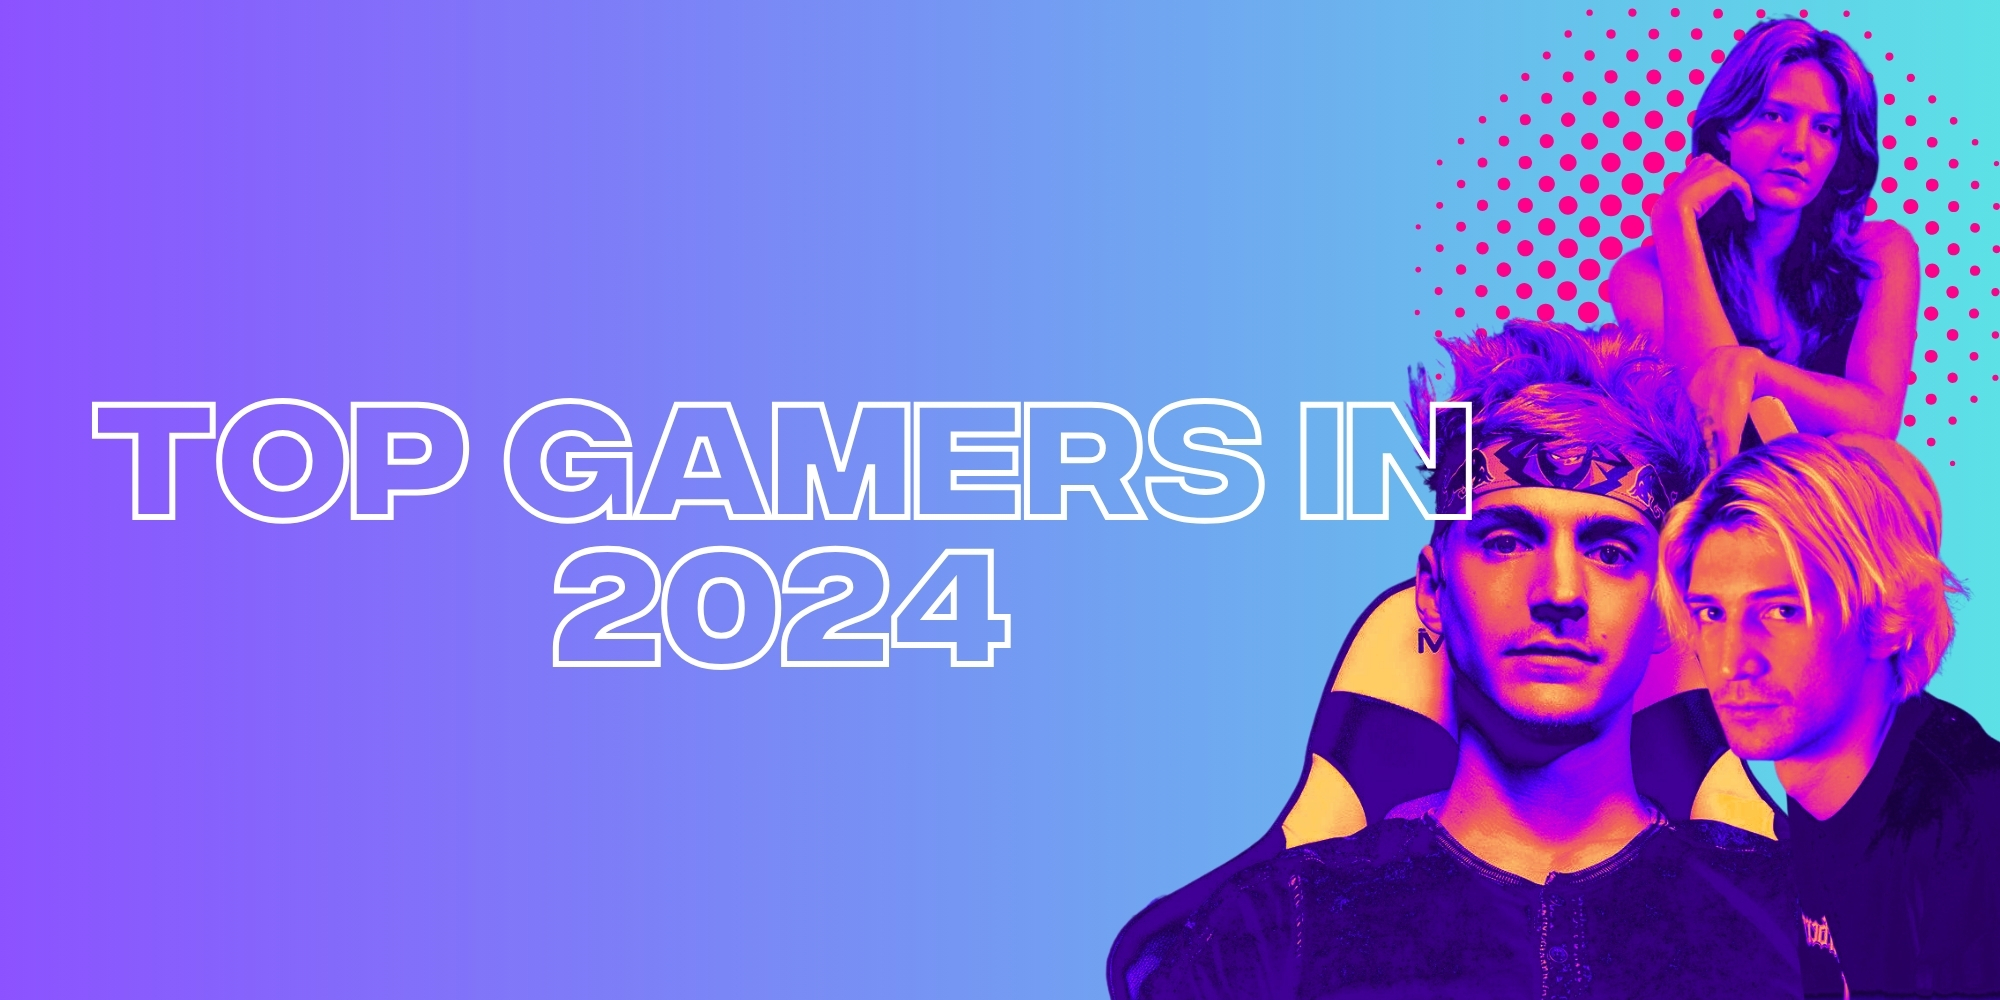 Best Gamers In 2024 Banner 